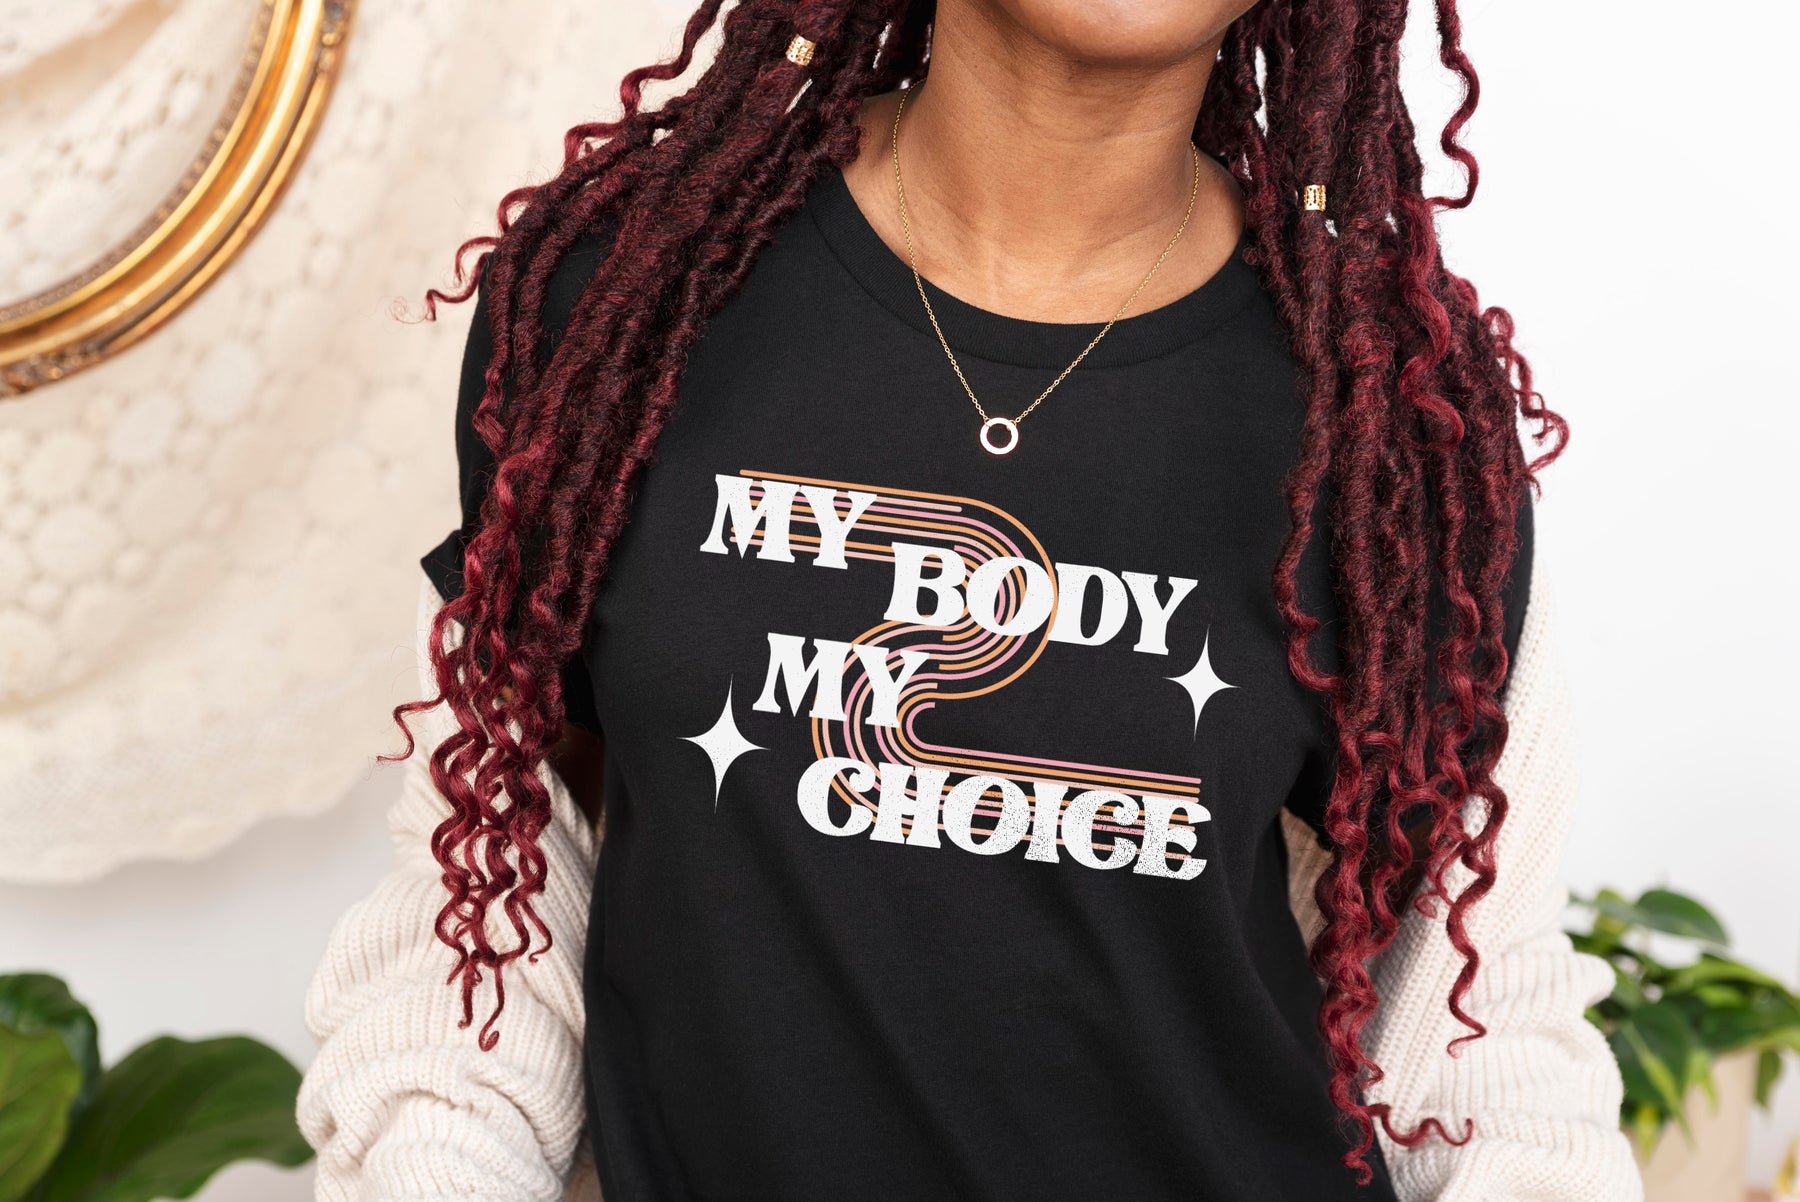 My Body My Choice Retro T-Shirt